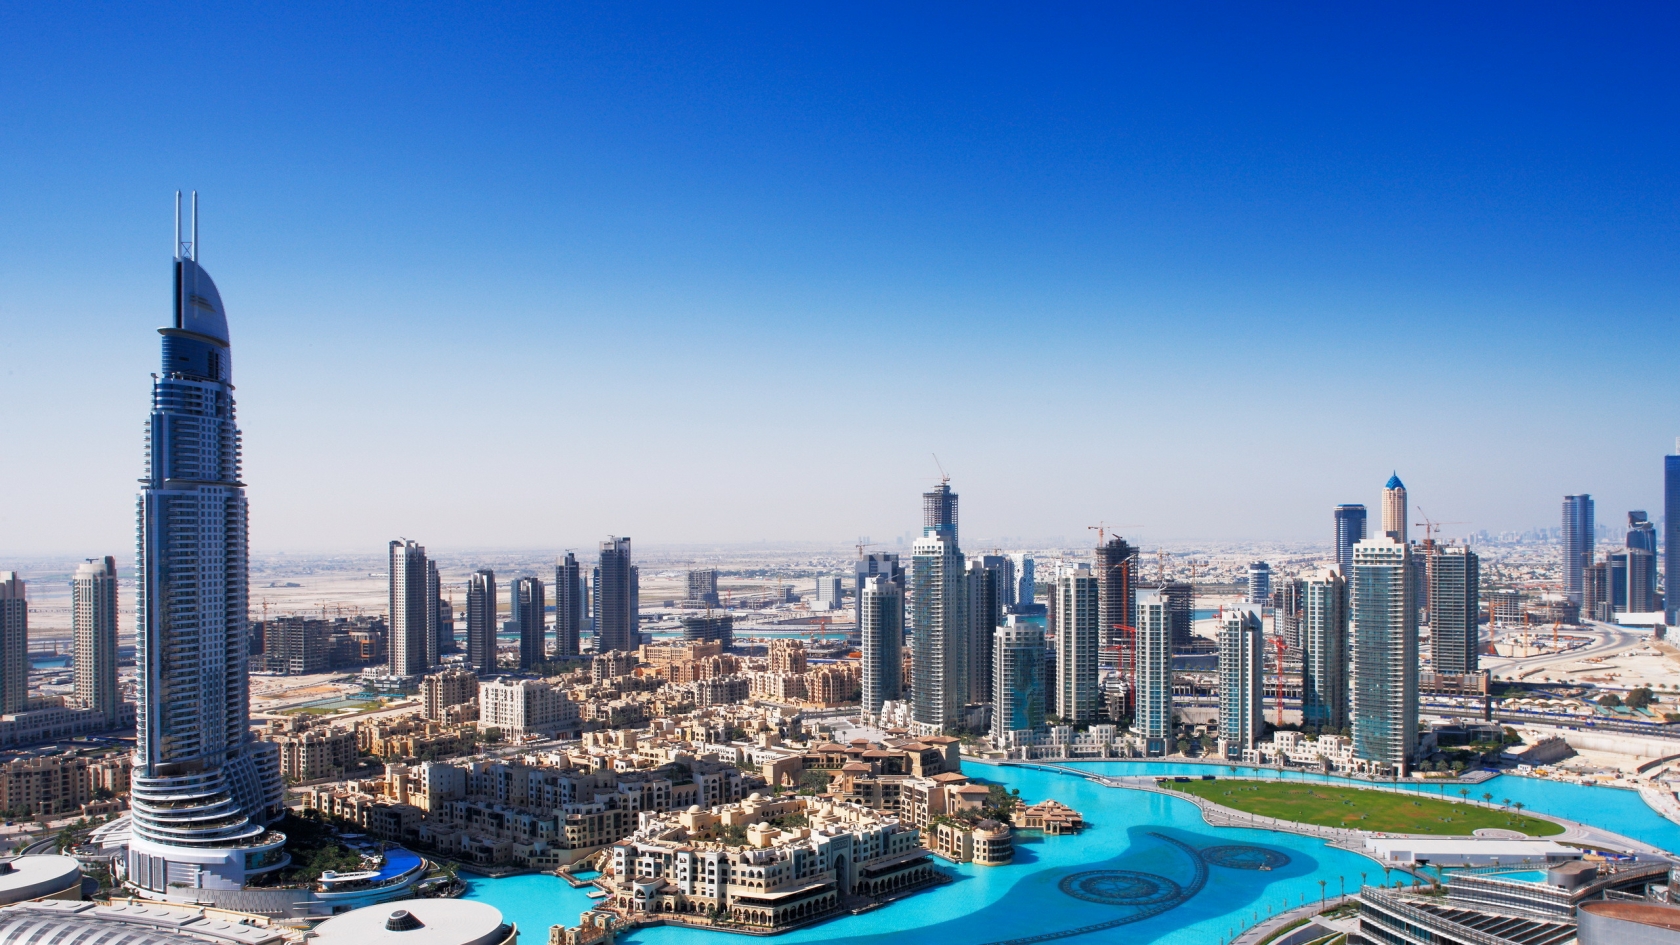 Dubai Overview for 1680 x 945 HDTV resolution